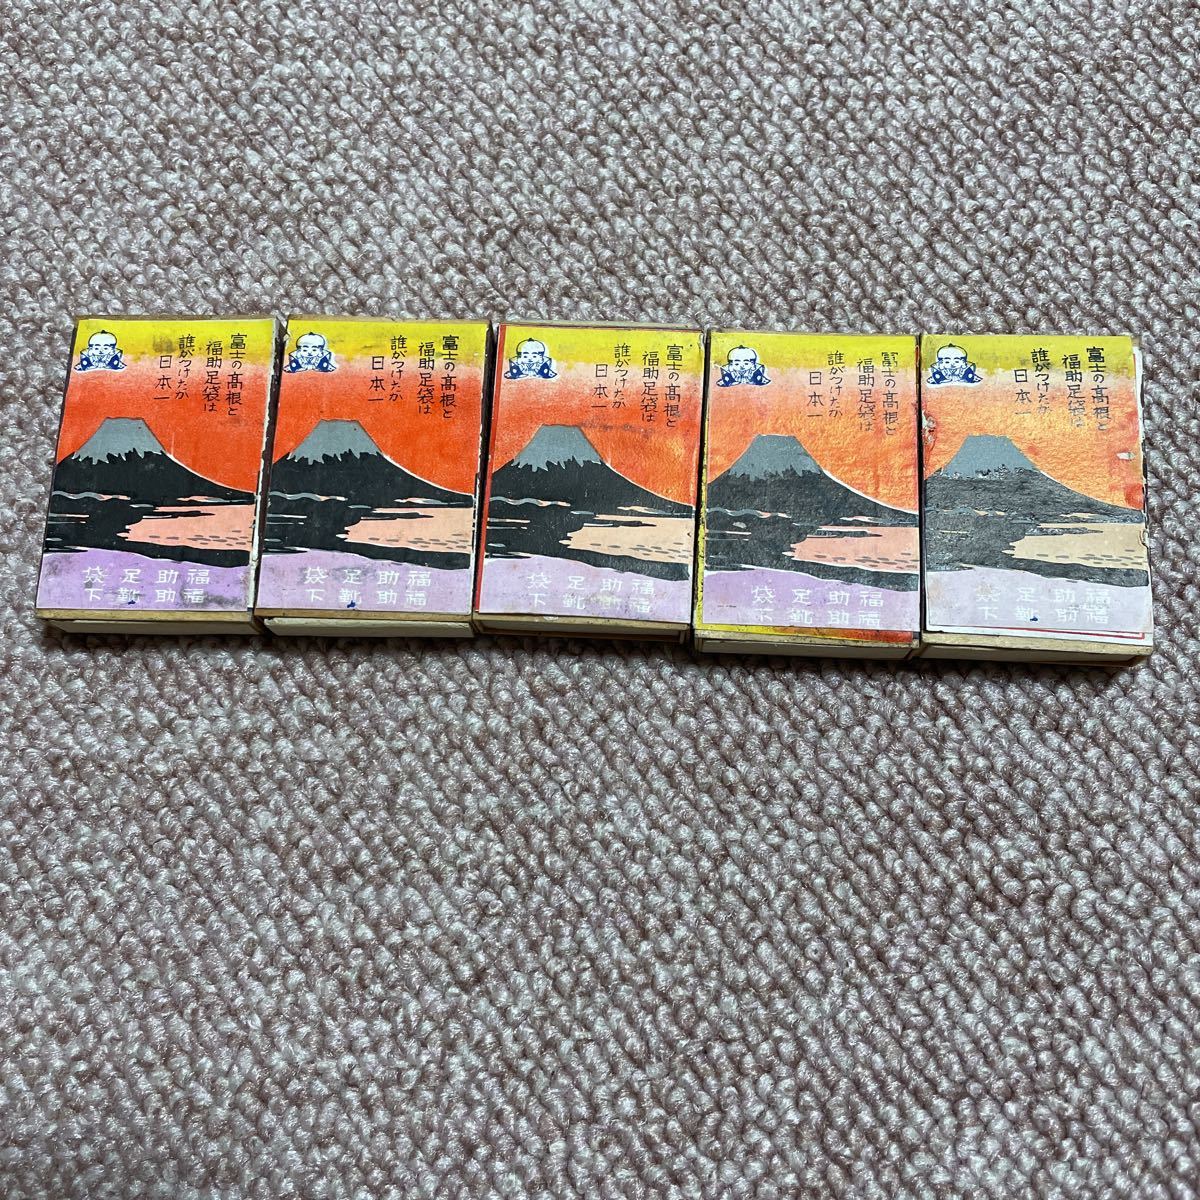 福助 足袋 靴下 北海道大博覧会 昔のマッチ箱 5箱 4種類の画像1